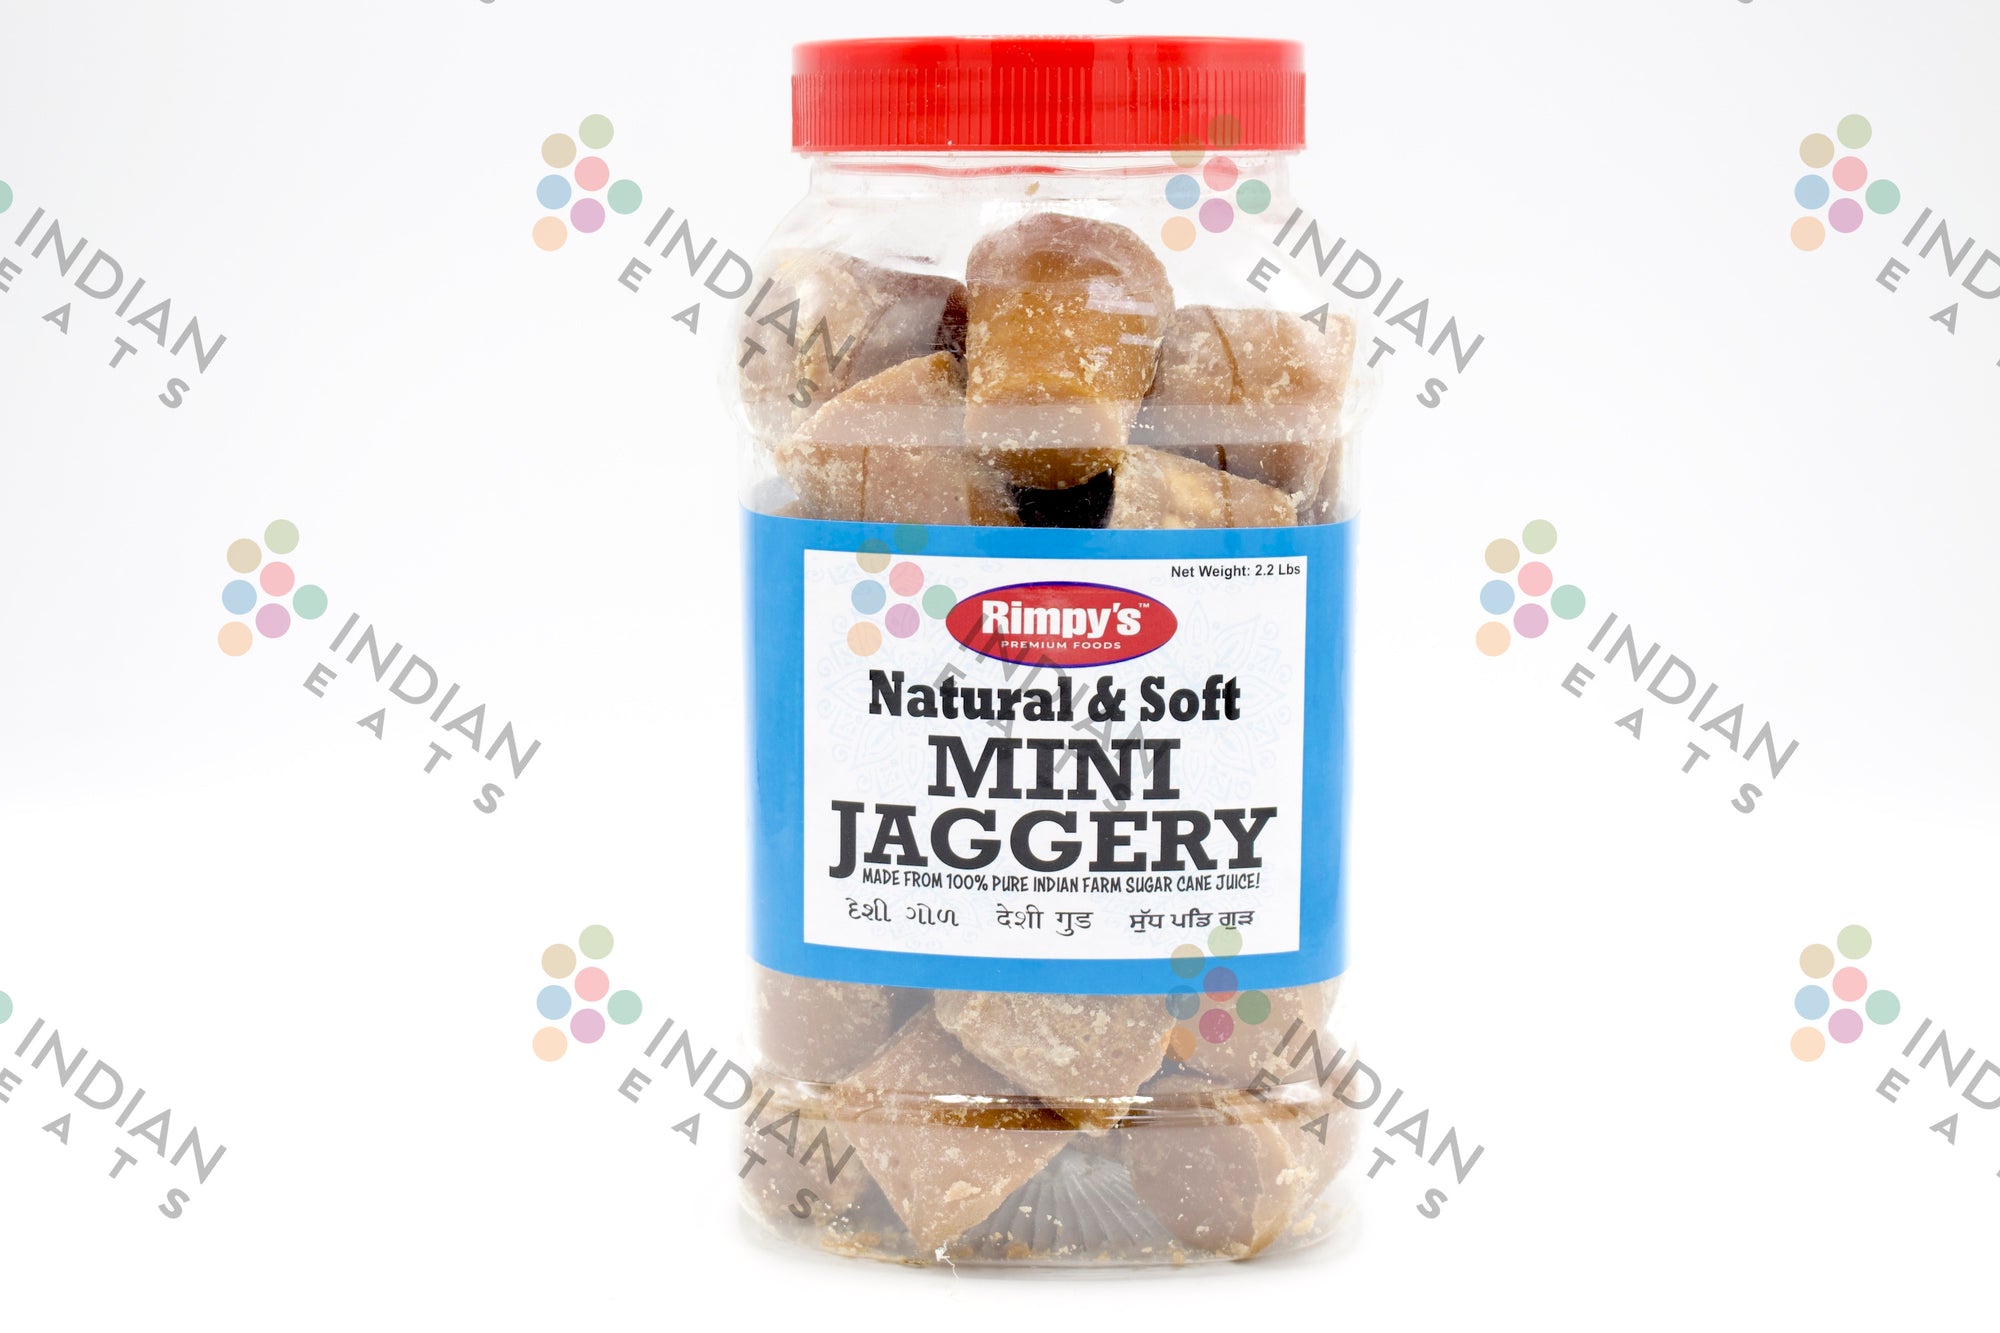 Rimpy's Natural & Soft Mini Jaggery